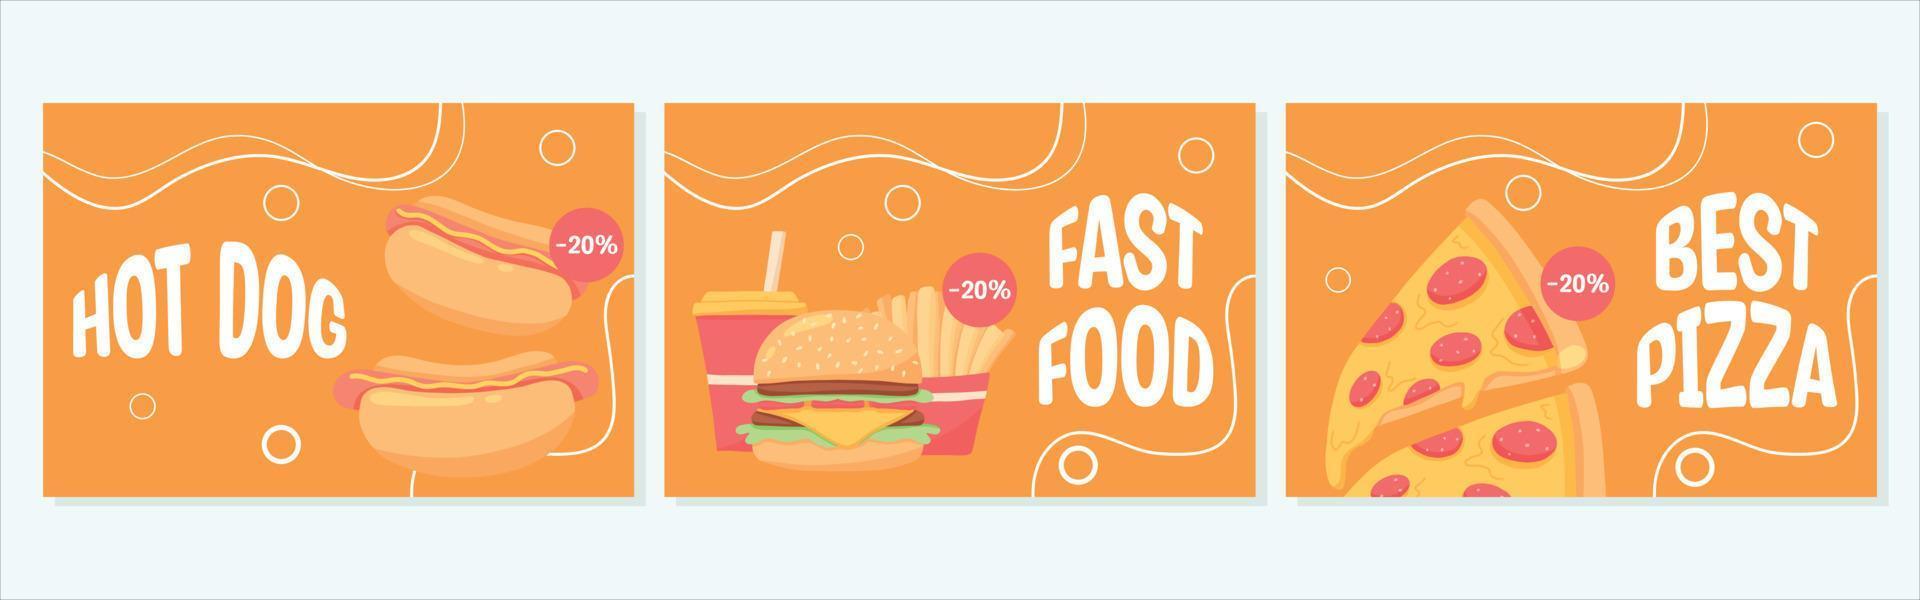 juego de carteles de comida rápida. volantes m hamburguesa, hot dog, papas fritas, pizza. folletos de descuento. ilustración vectorial vector